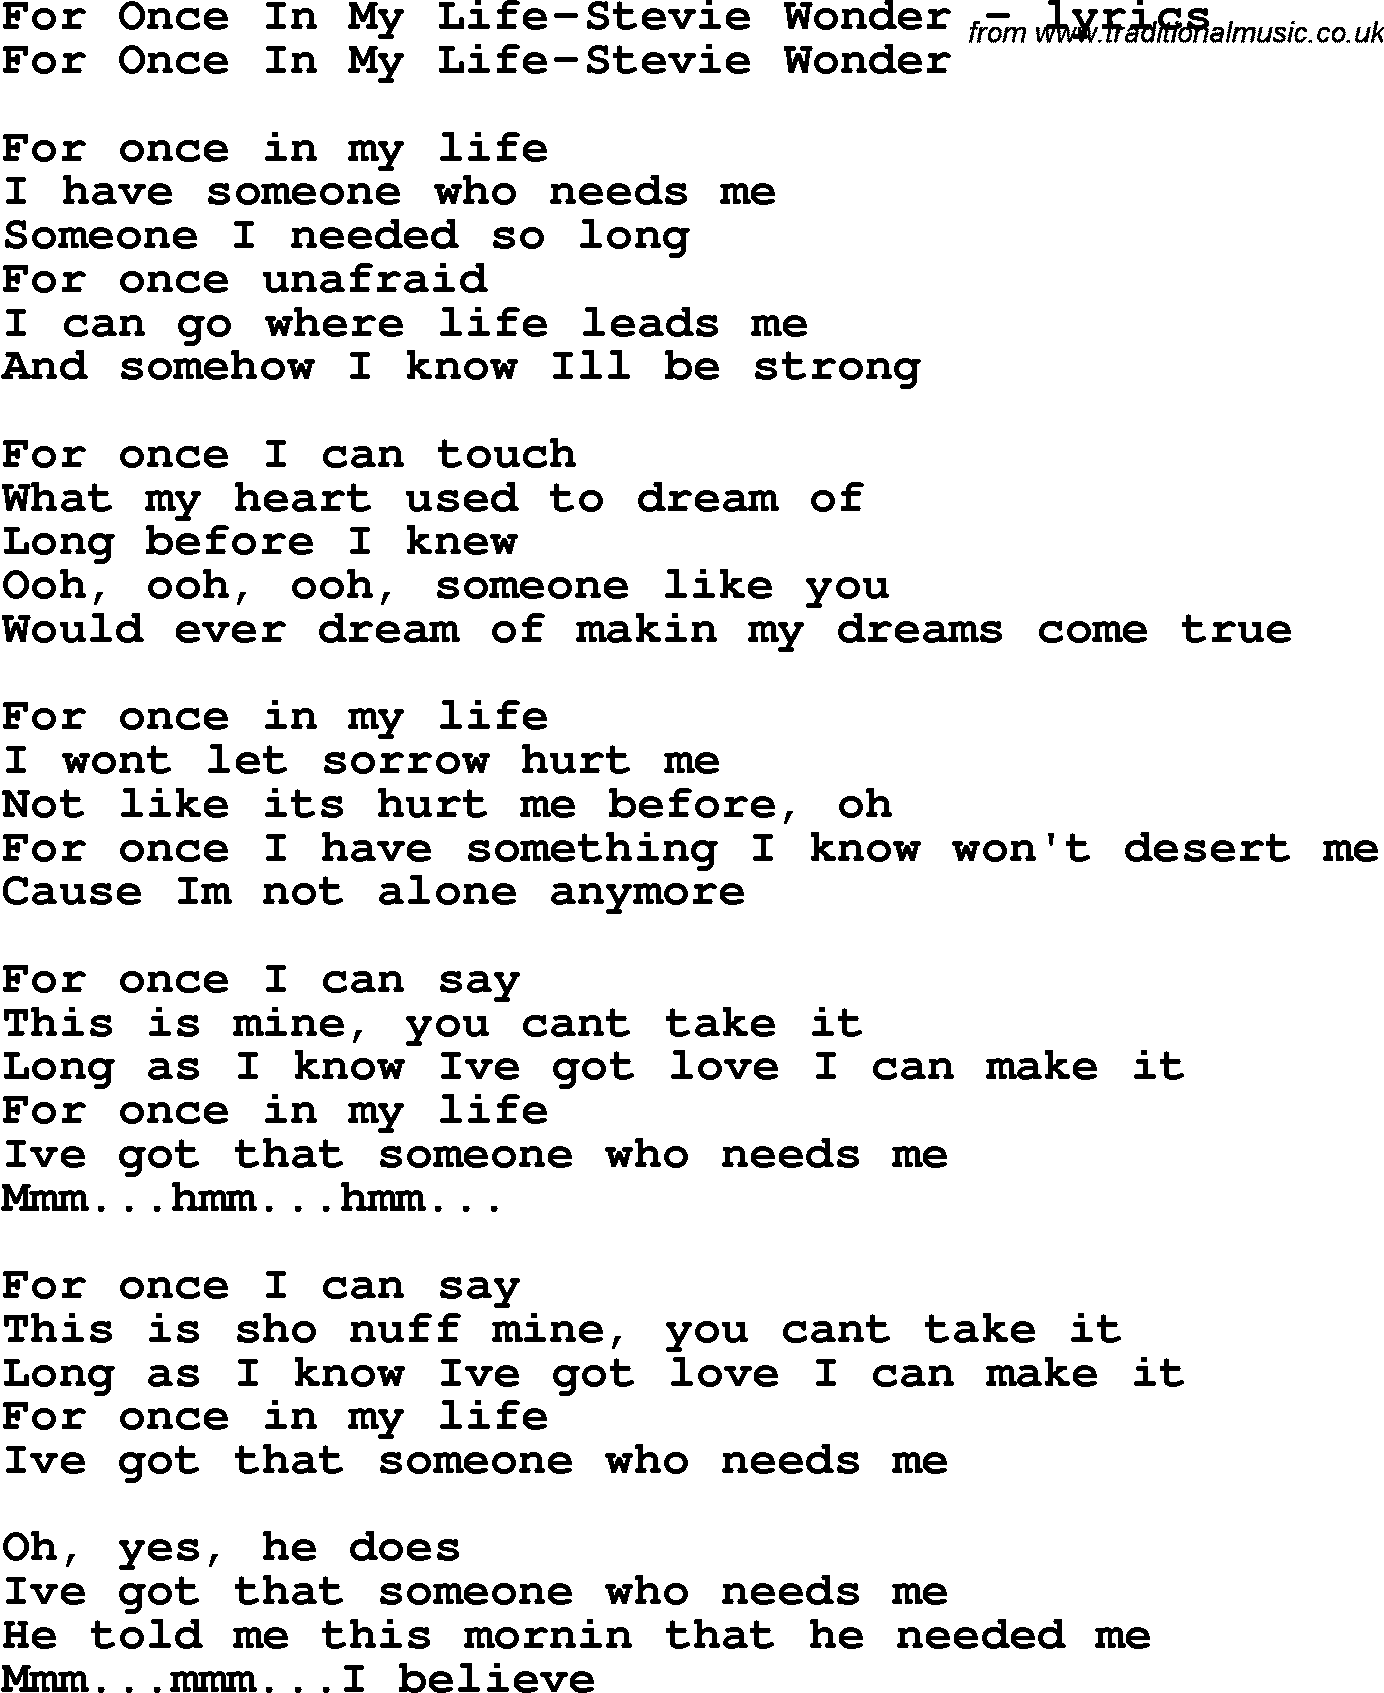 Love Song Lyrics for: For Once In My Life-Stevie Wonder